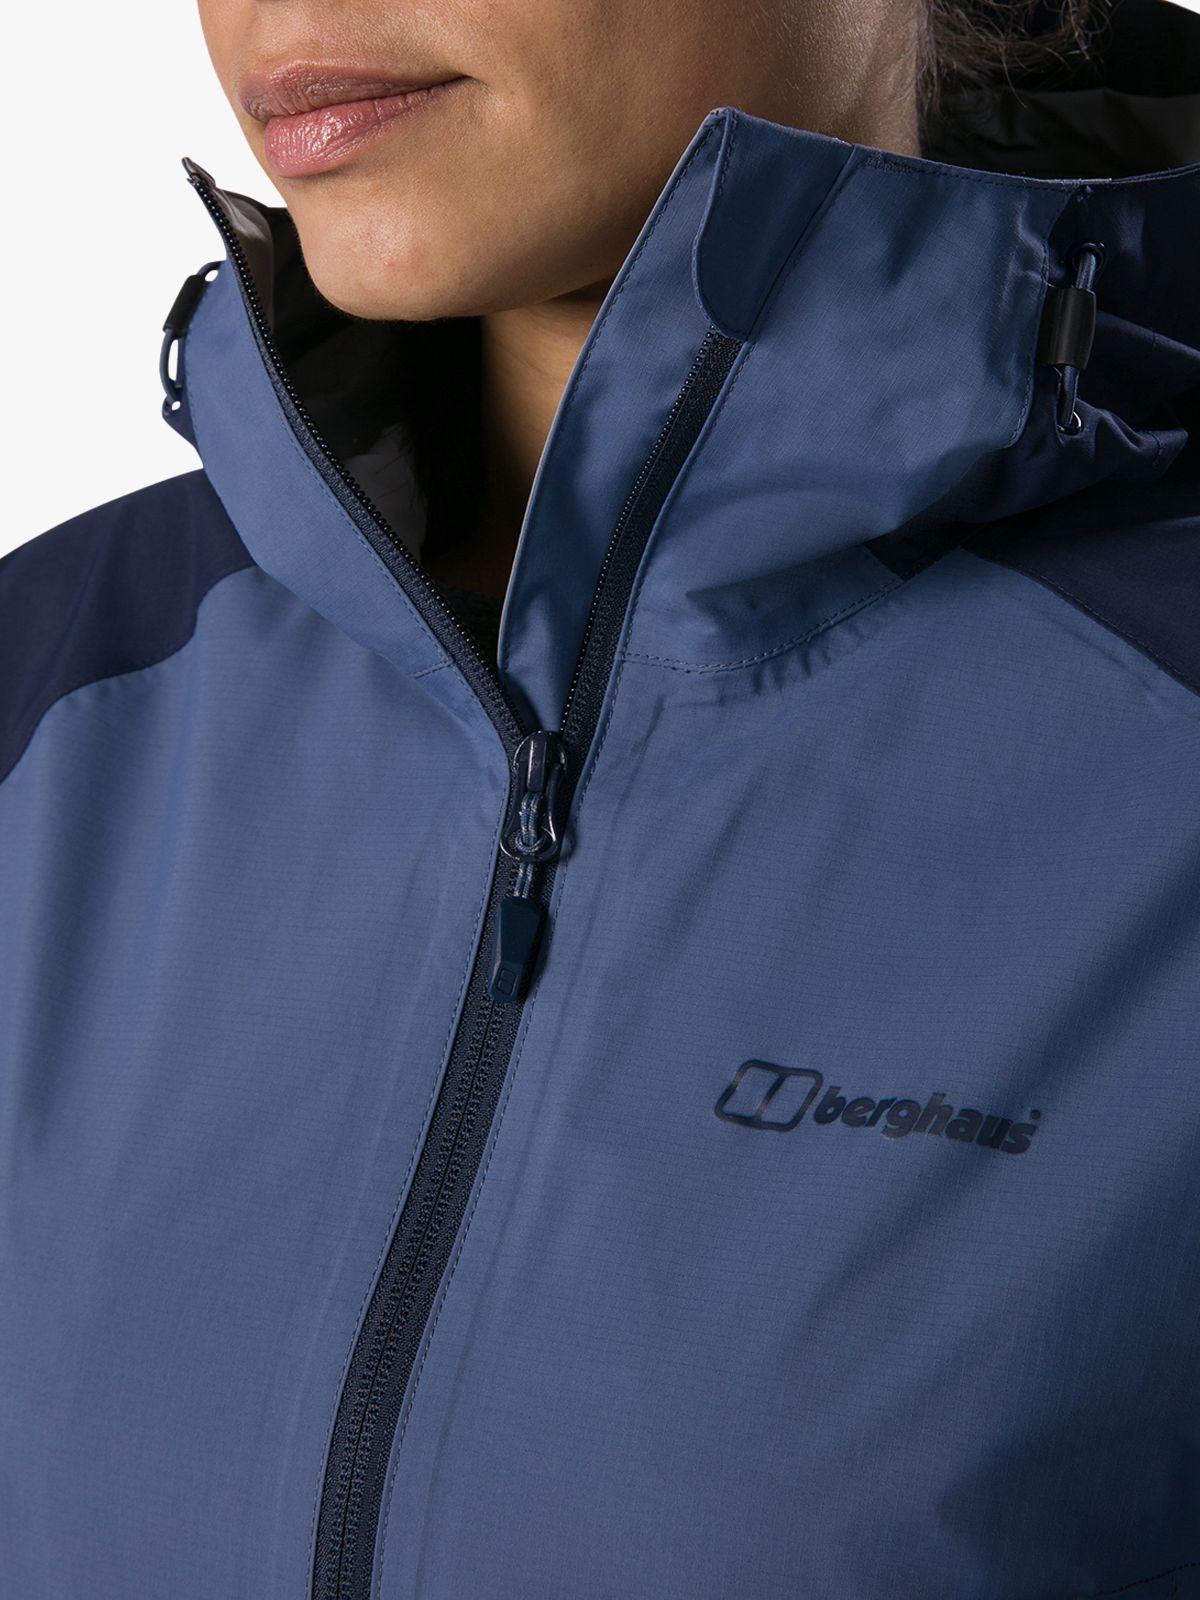 Berghaus Deluge Pro Women S Waterproof Jacket Vintage Indigo Dusk At John Lewis Partners